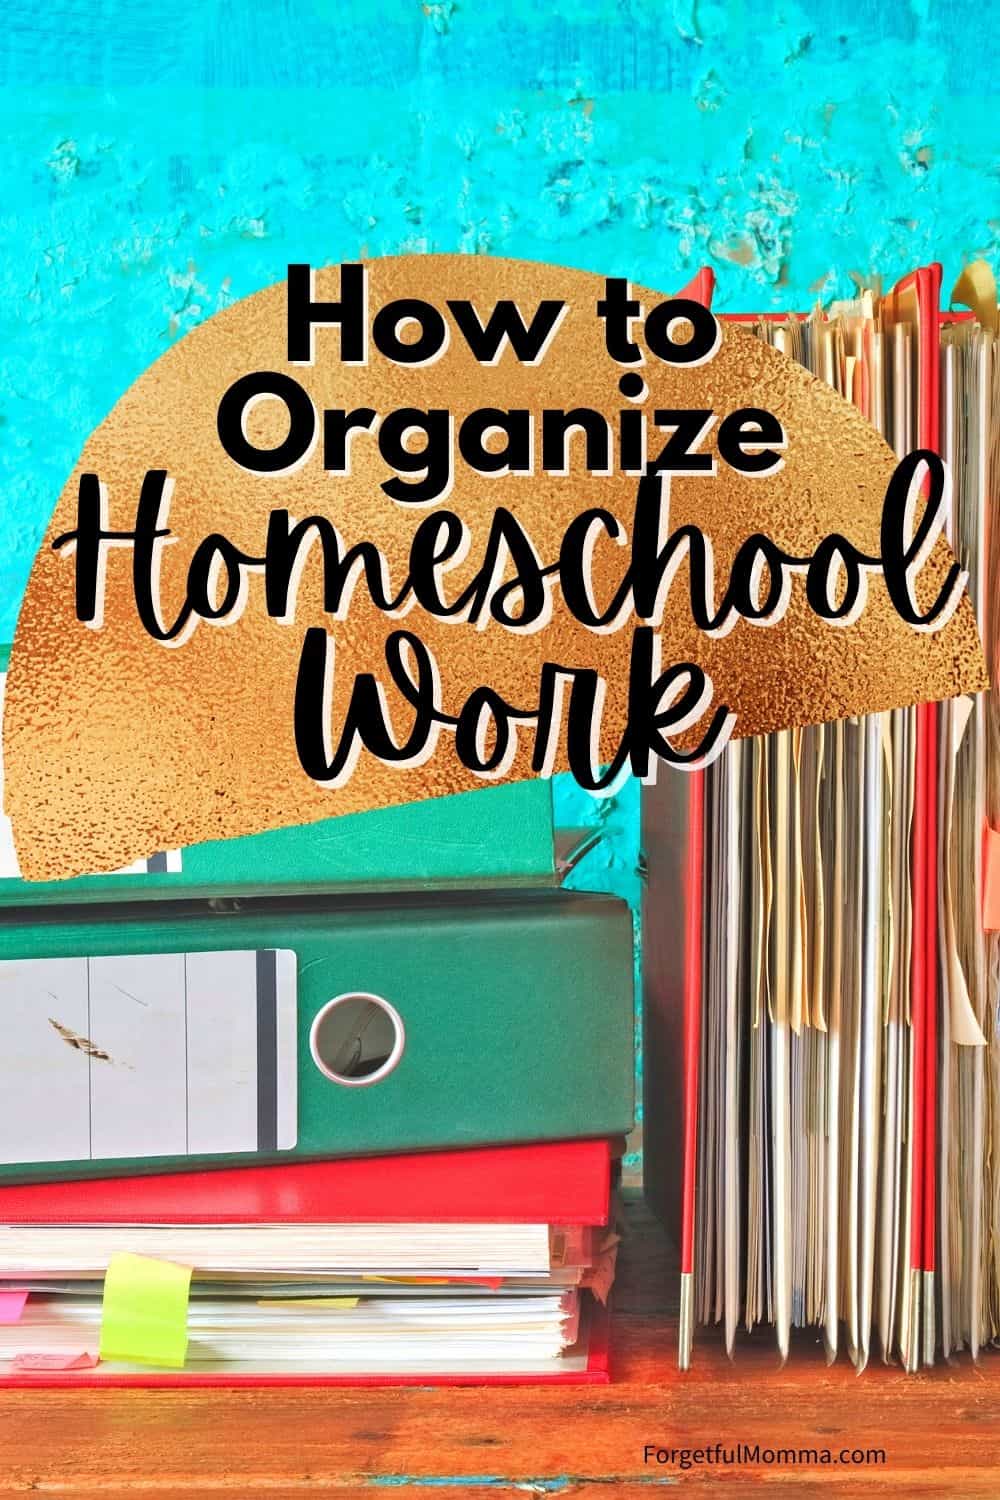 How to Organize Homeschool Work - binders with text overlay